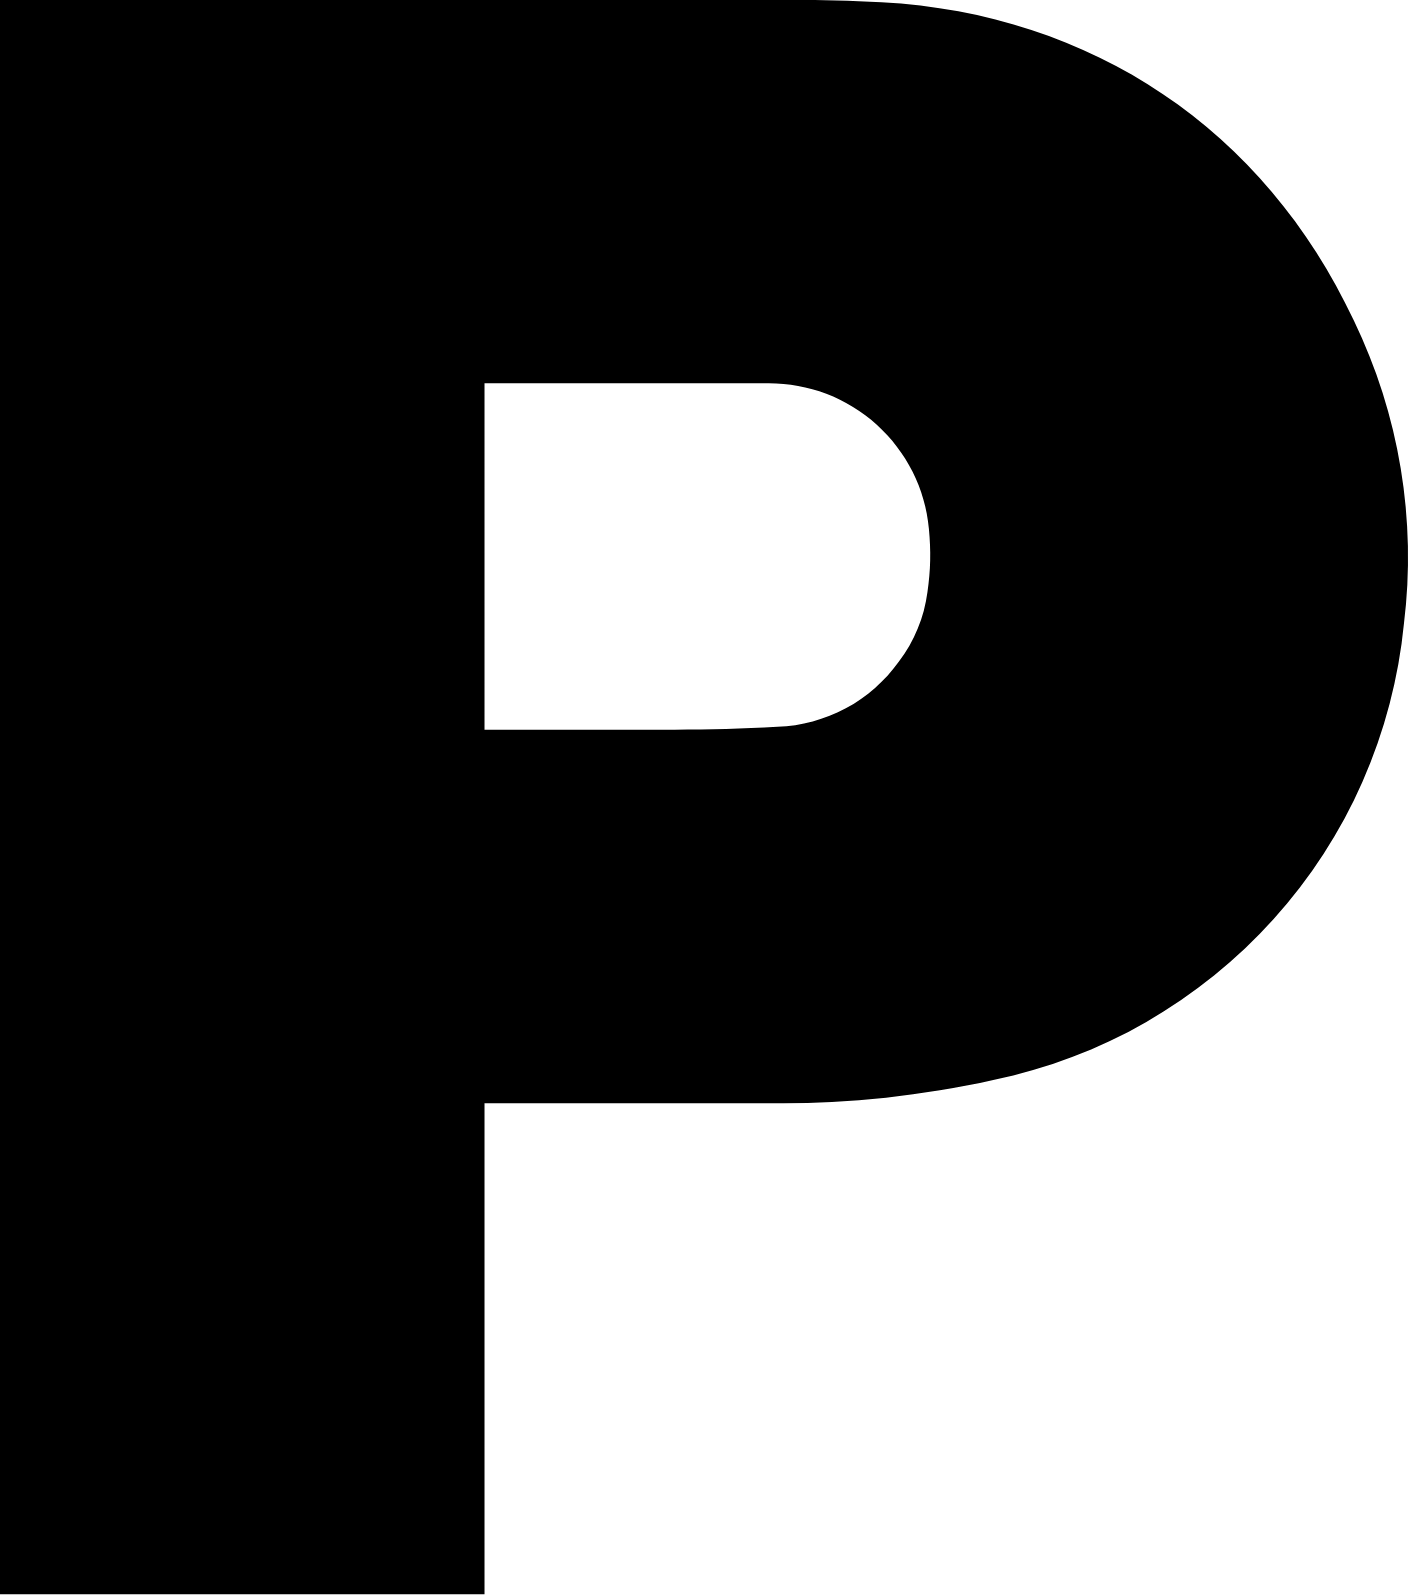 panasonic logo black